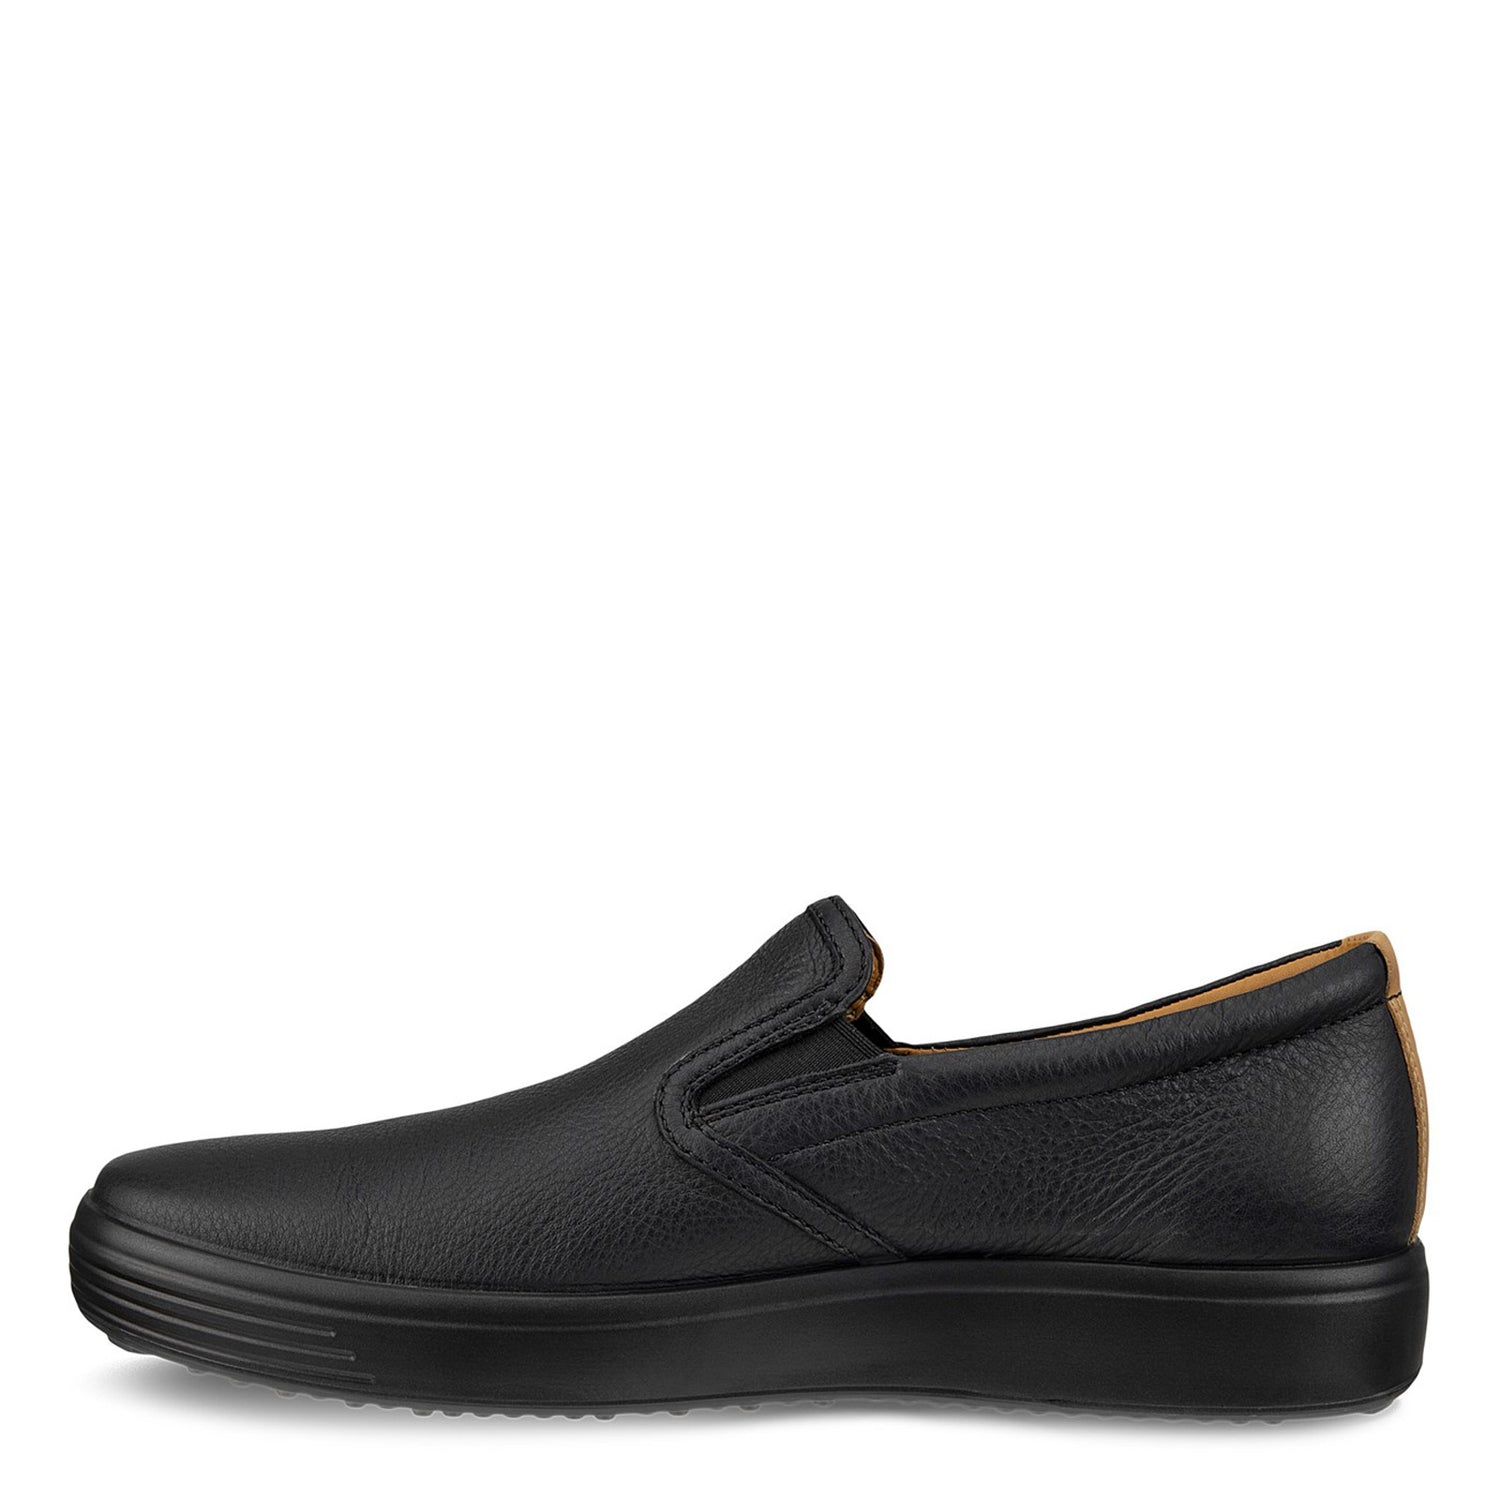 Peltz Shoes  Men's Ecco Soft 7 Slip-On Sneaker Black 470484-59075